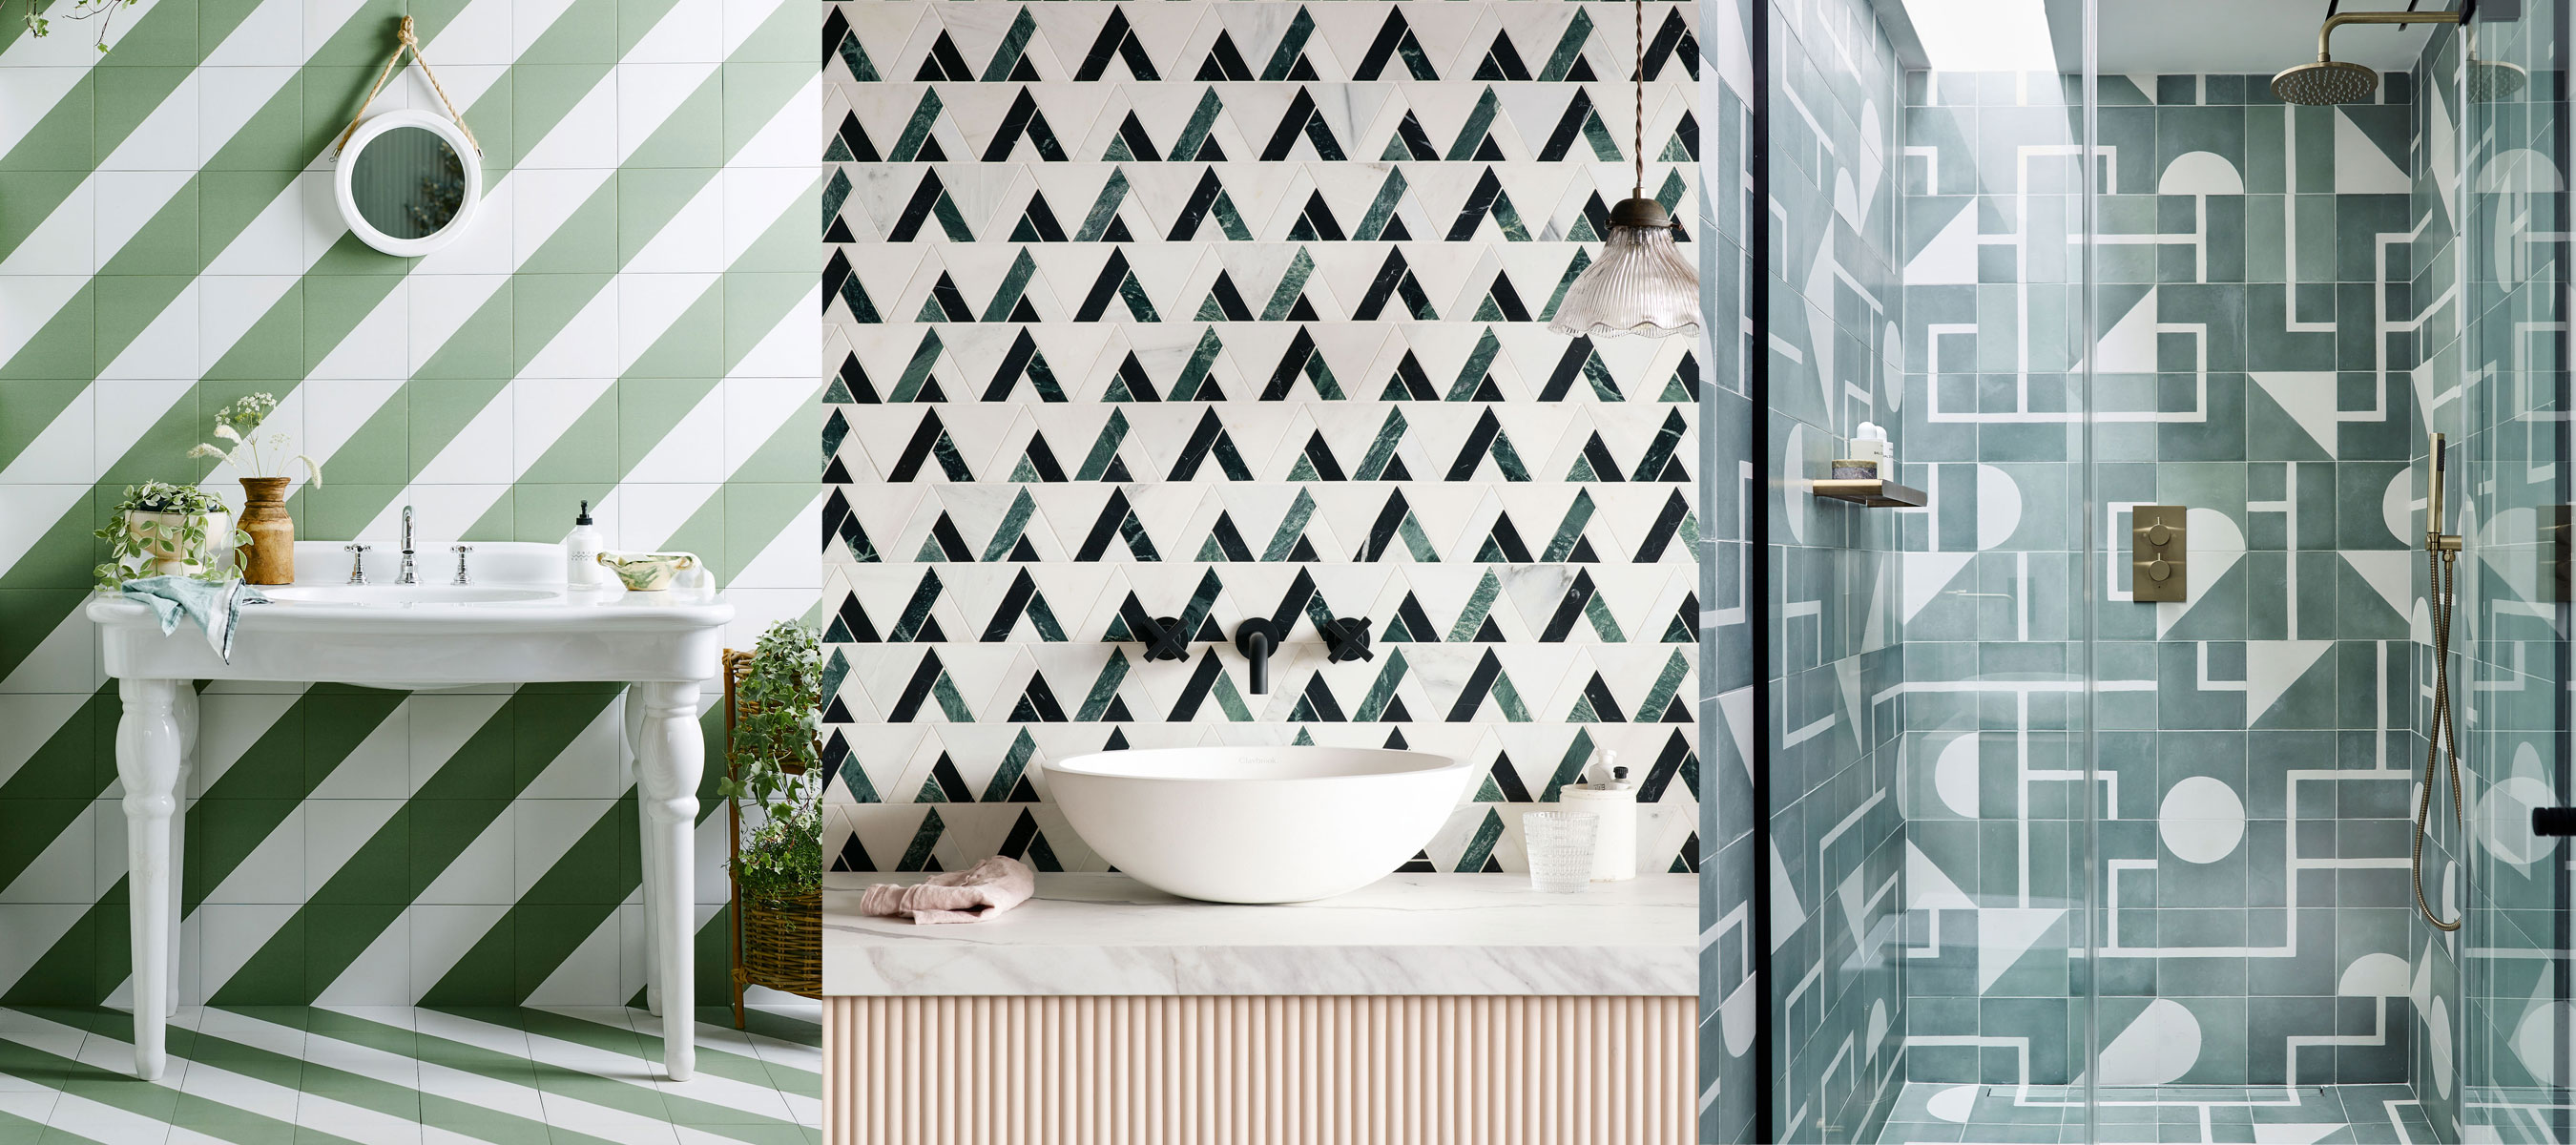 Bathroom tile ideas: 31 designs inspired by bathroom tiles |